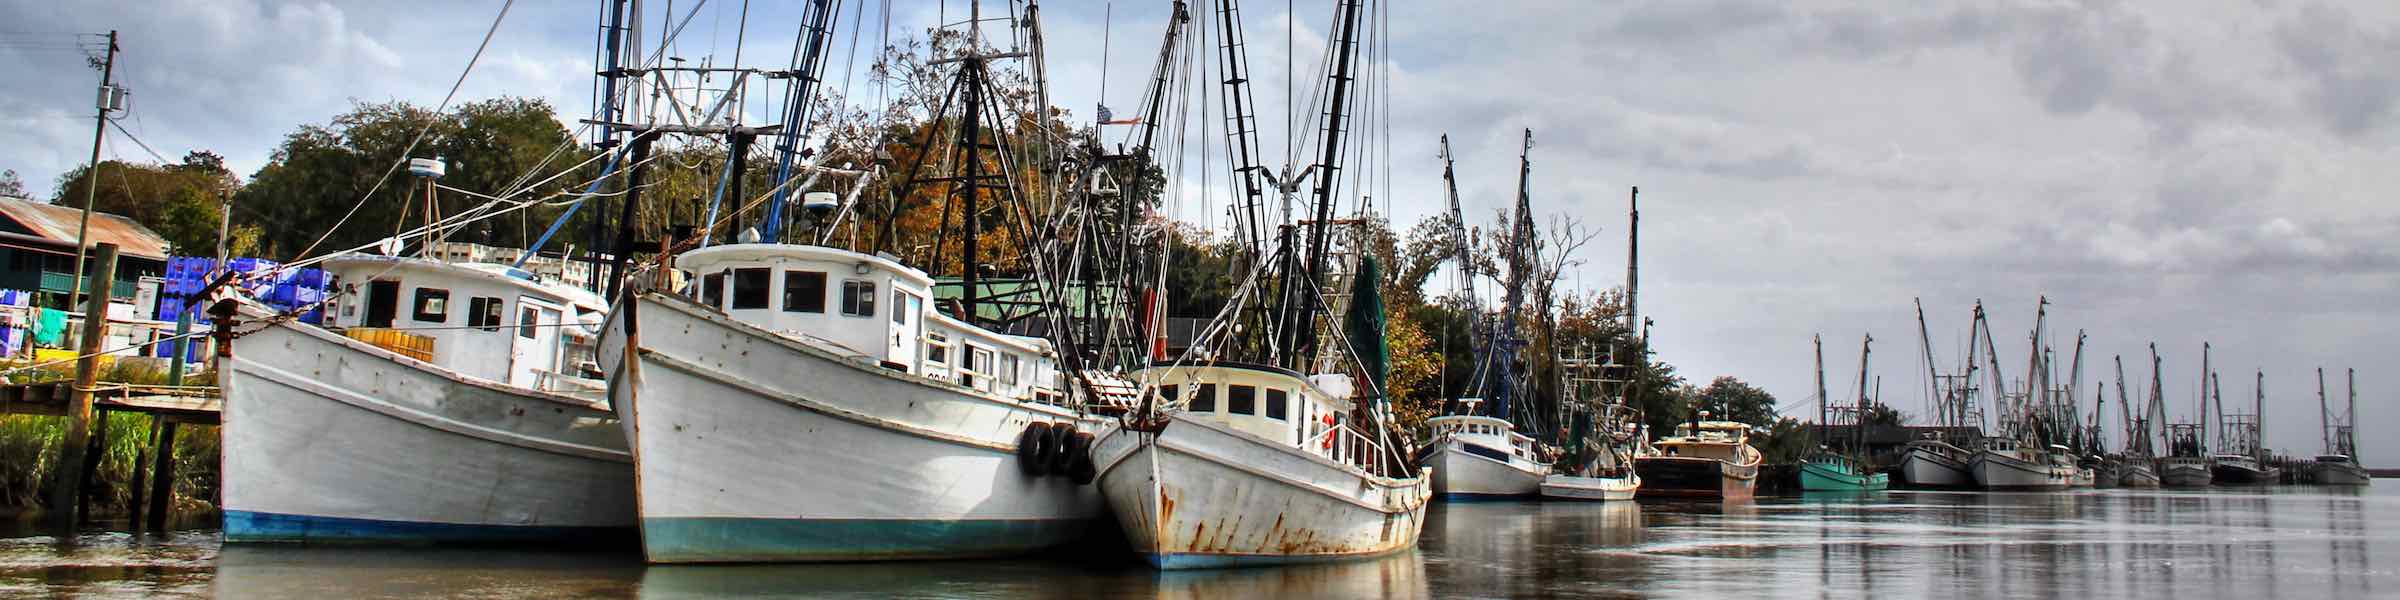 Shrimp boats docked along a Georgia river.